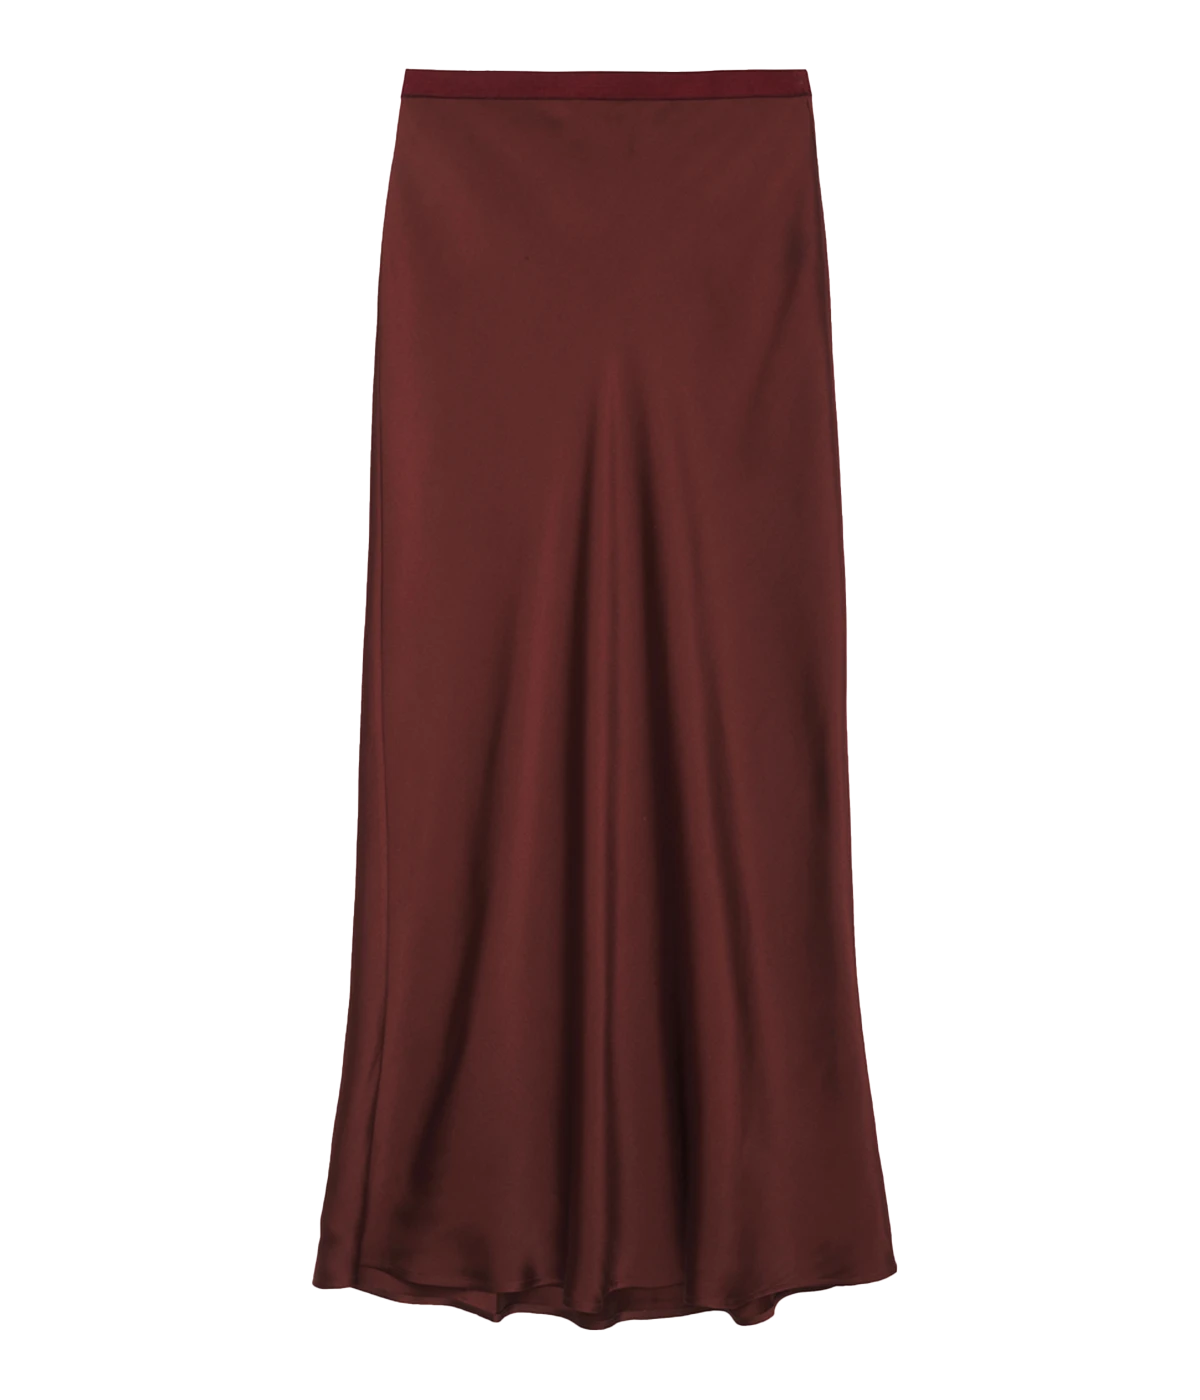 Bar Silk Skirt in Red Cherry